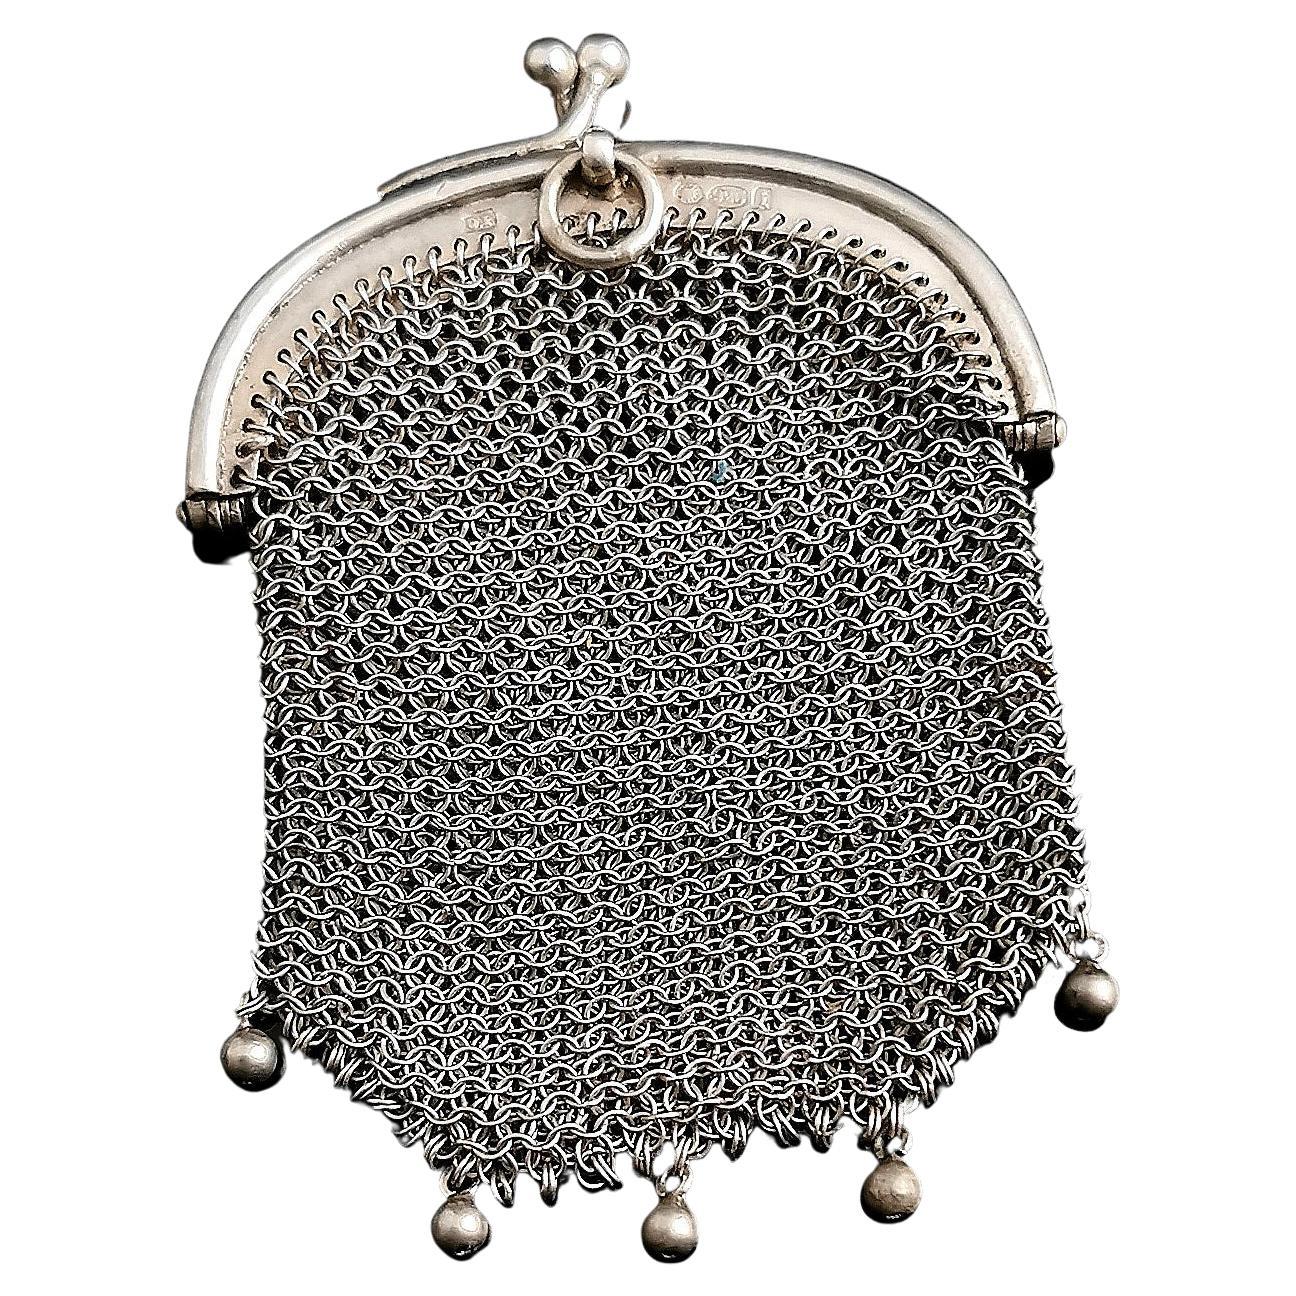 Antique Swiss silver chatelaine purse, coin purse 